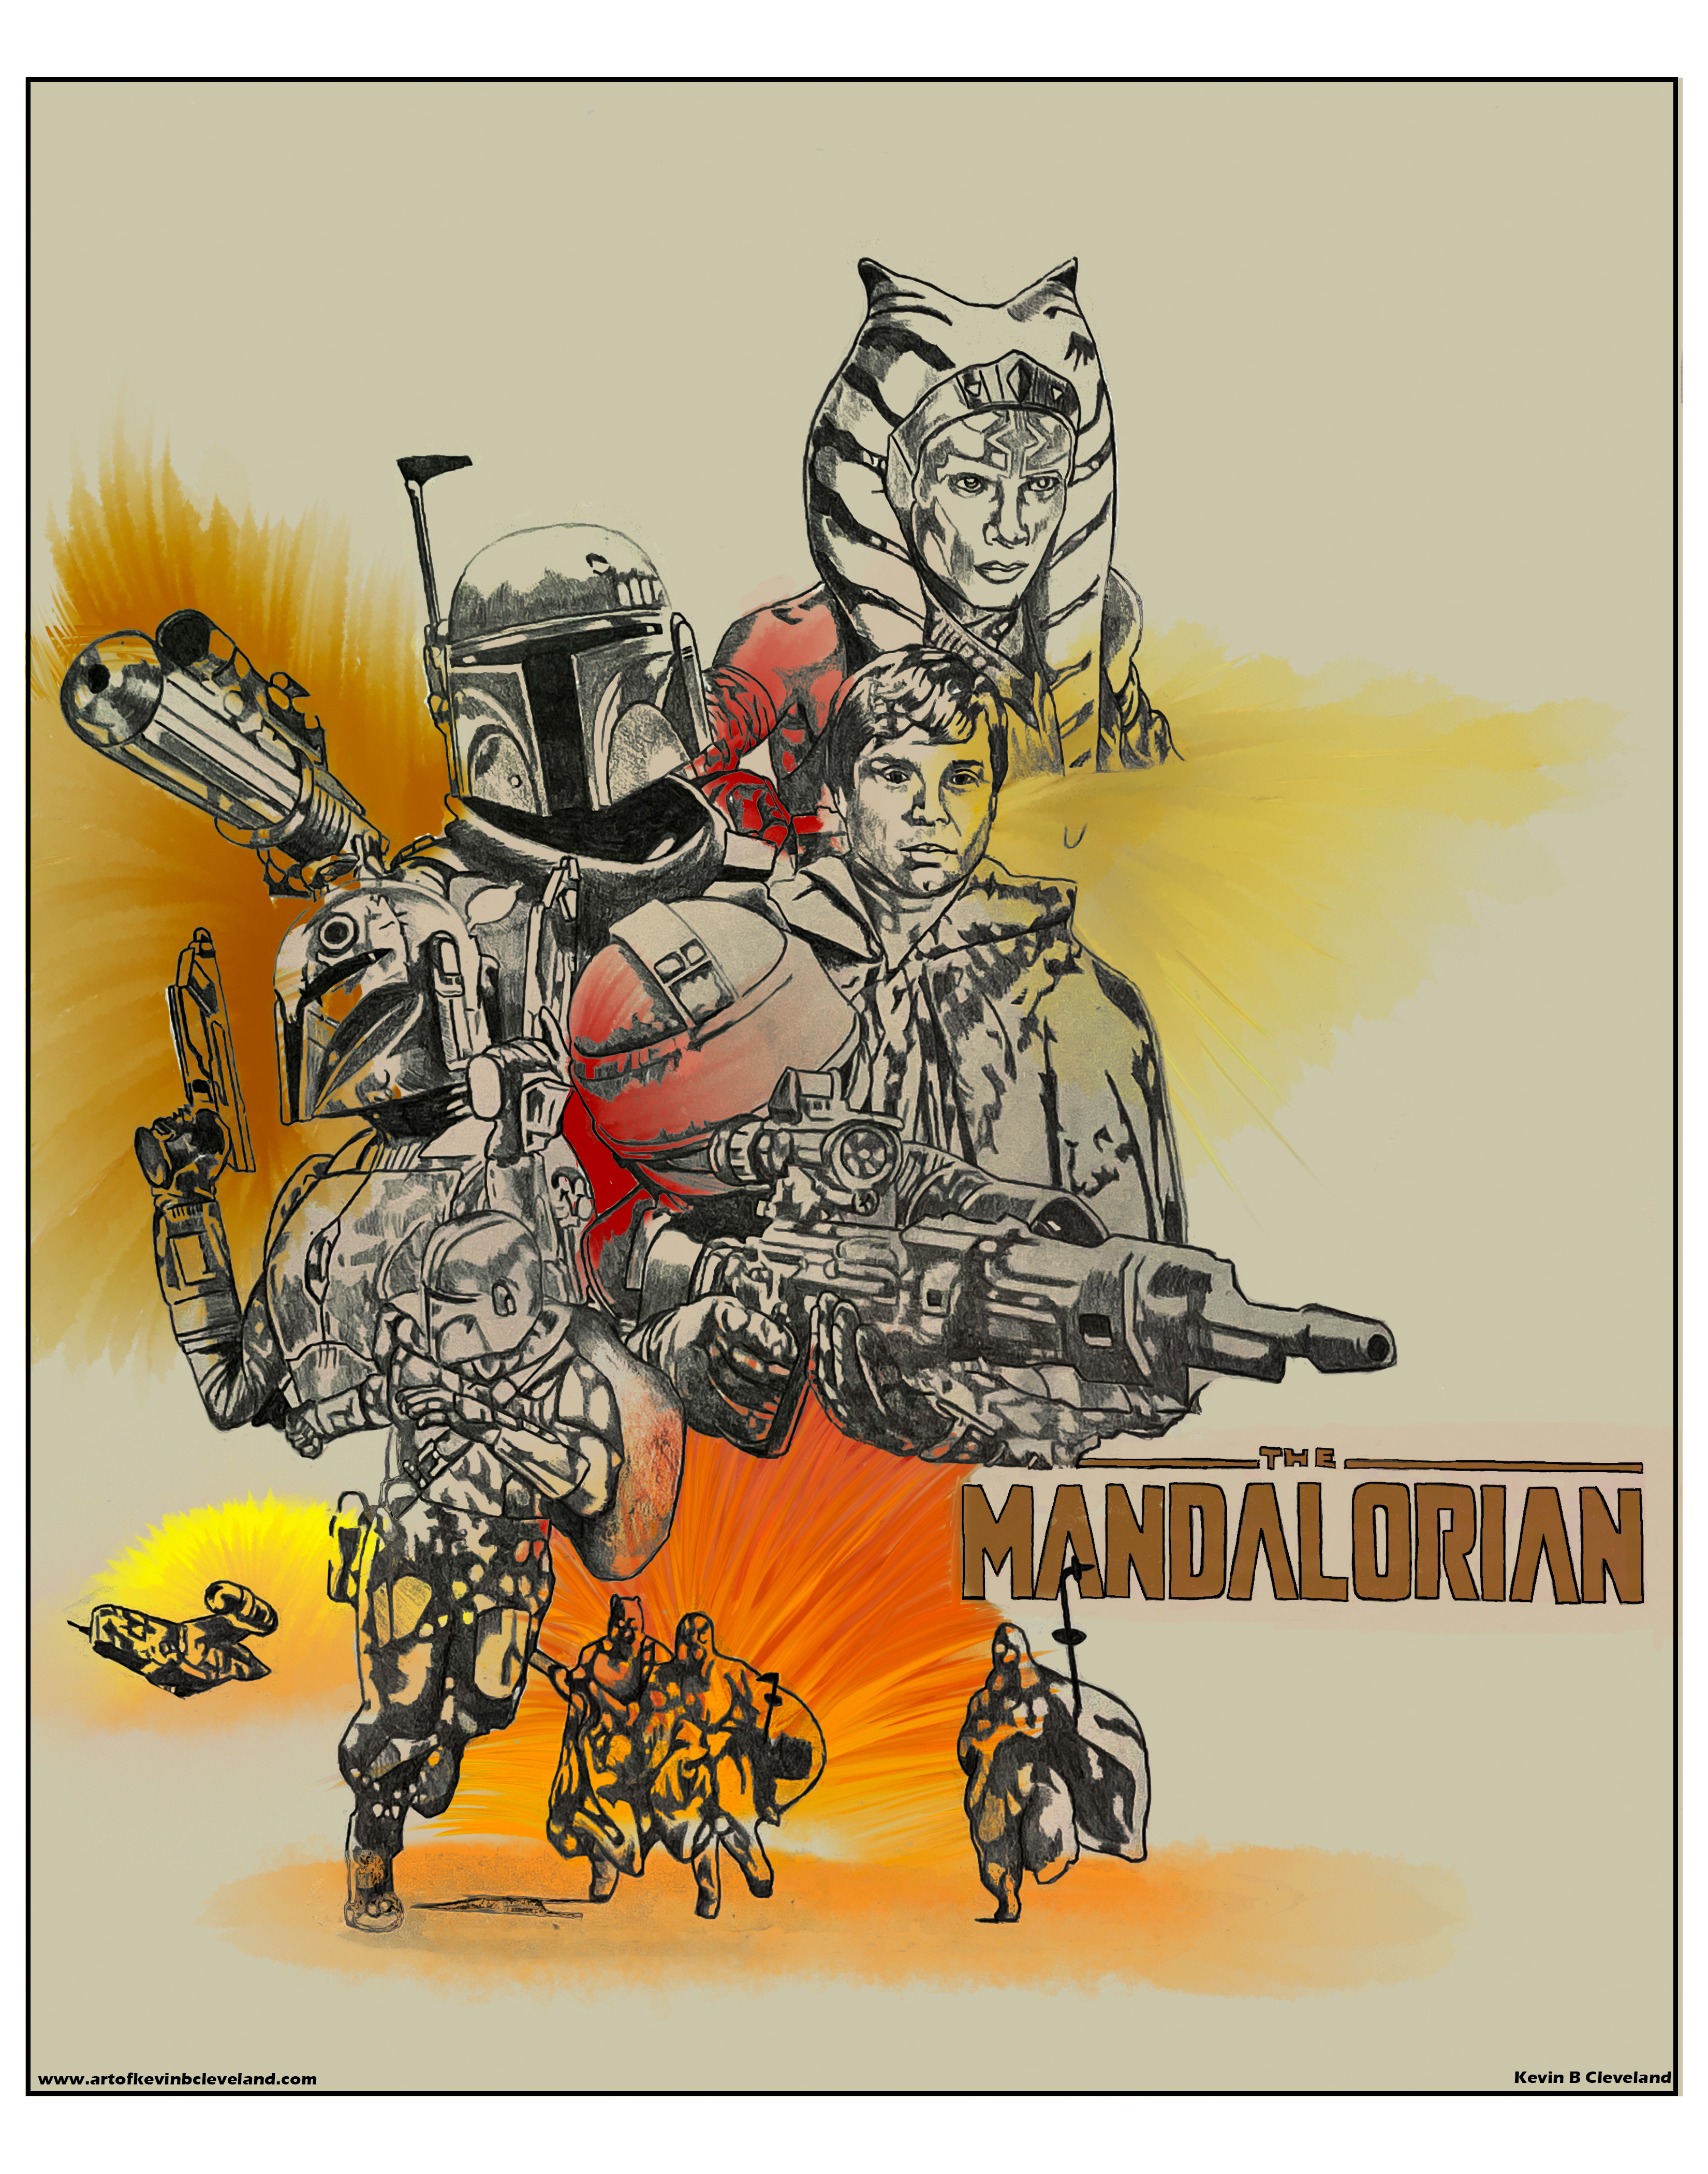 Mandalorian Season 2 poster mock up (playing with paint)